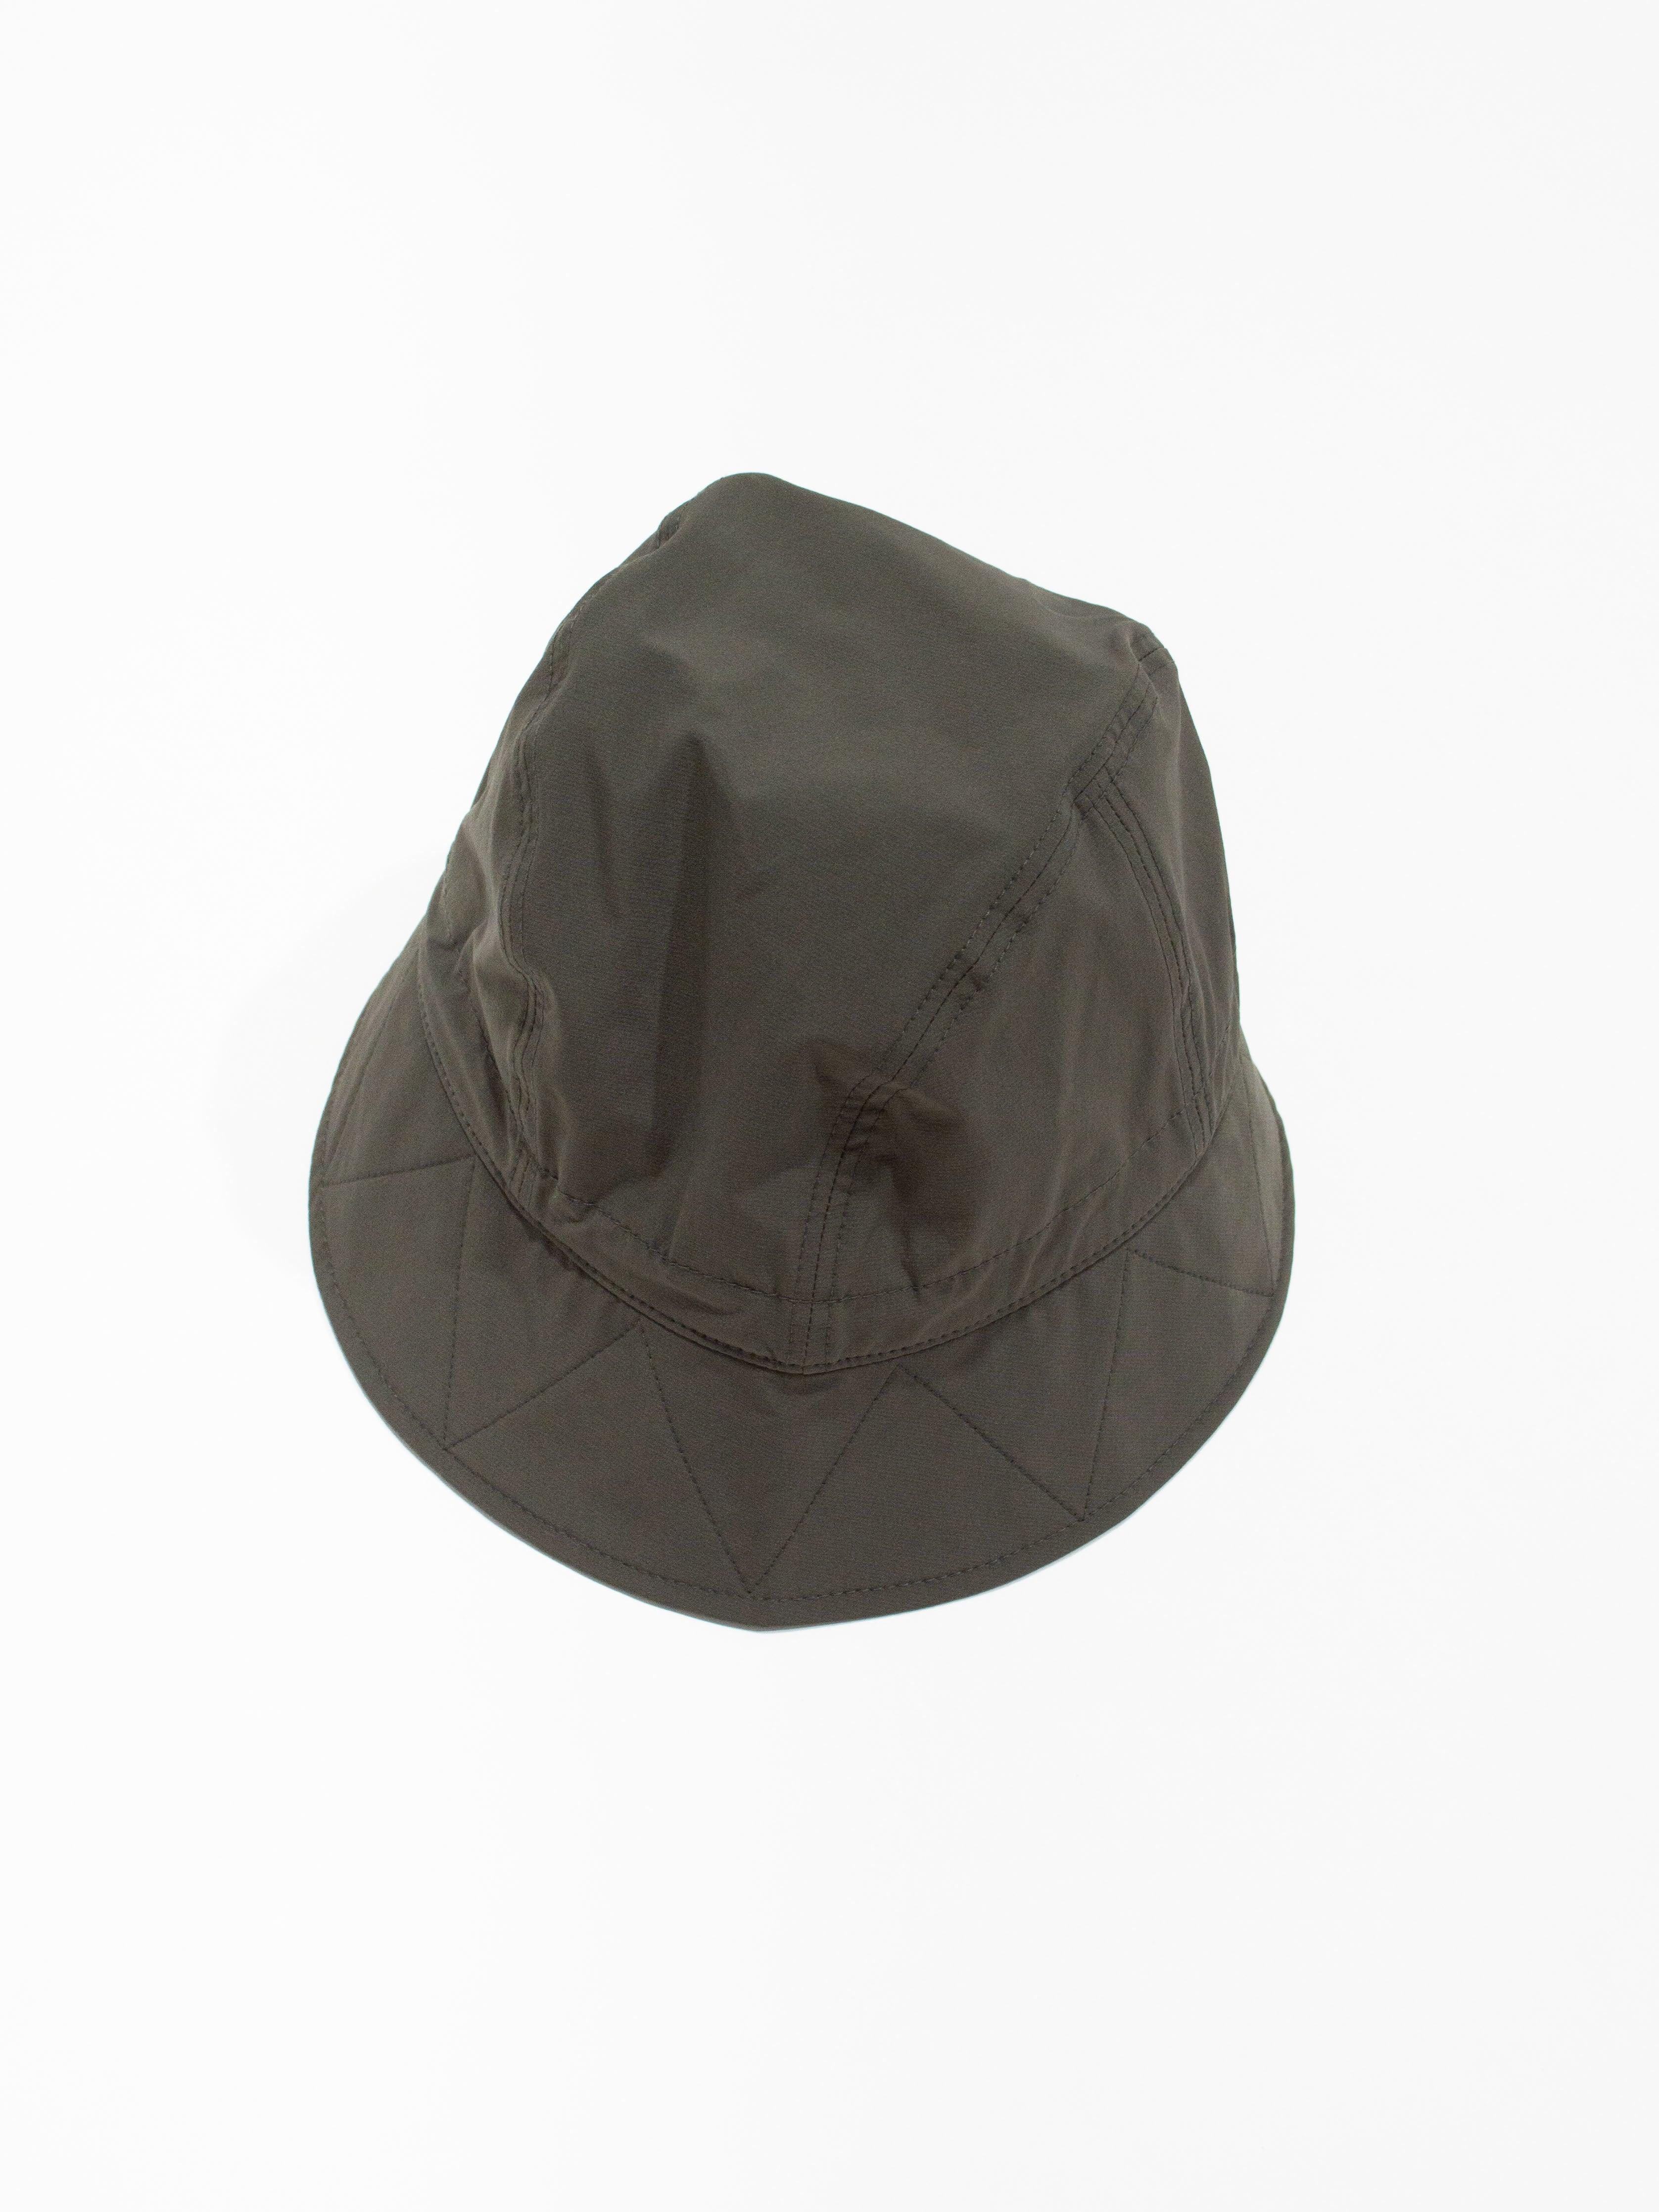 Namu Shop - CAYL AquaX Hat - Dark Sage